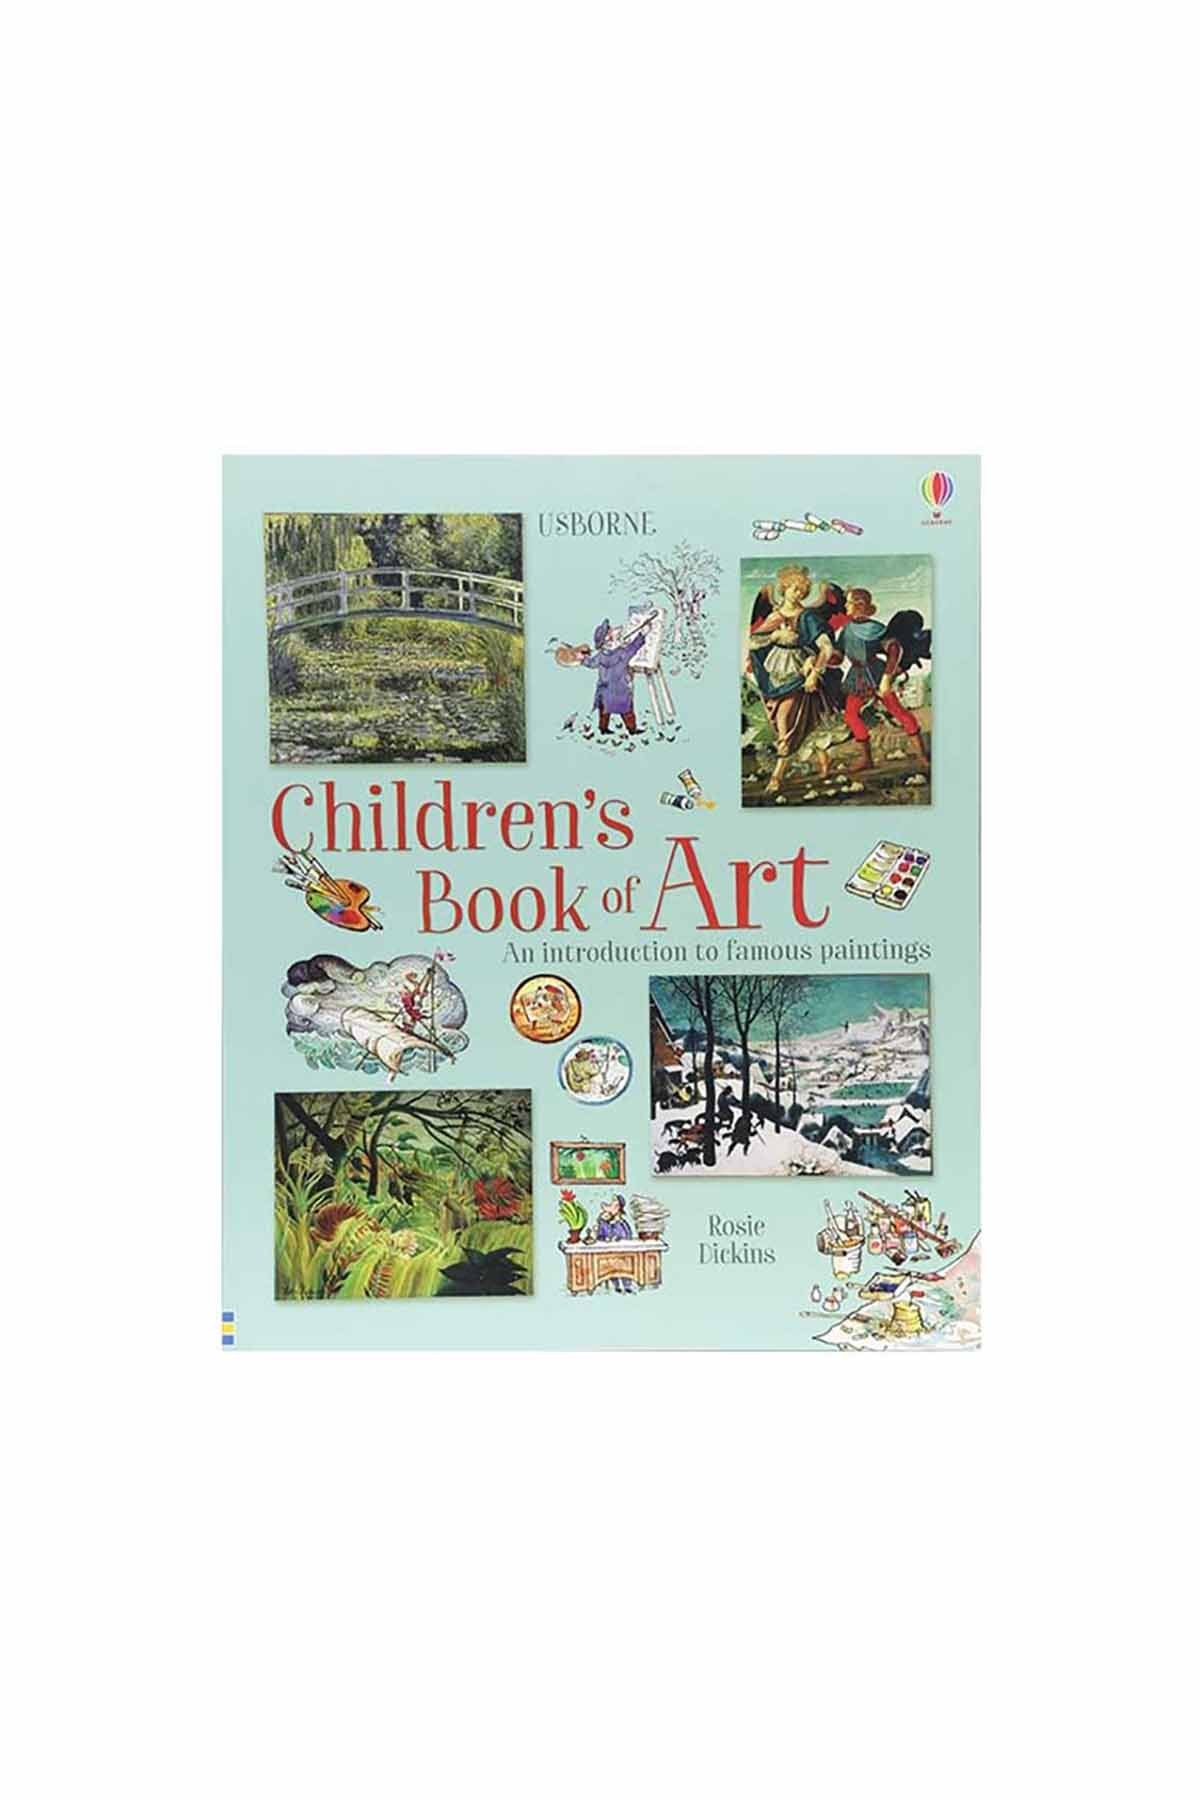 The Usborne Children's Book of Art